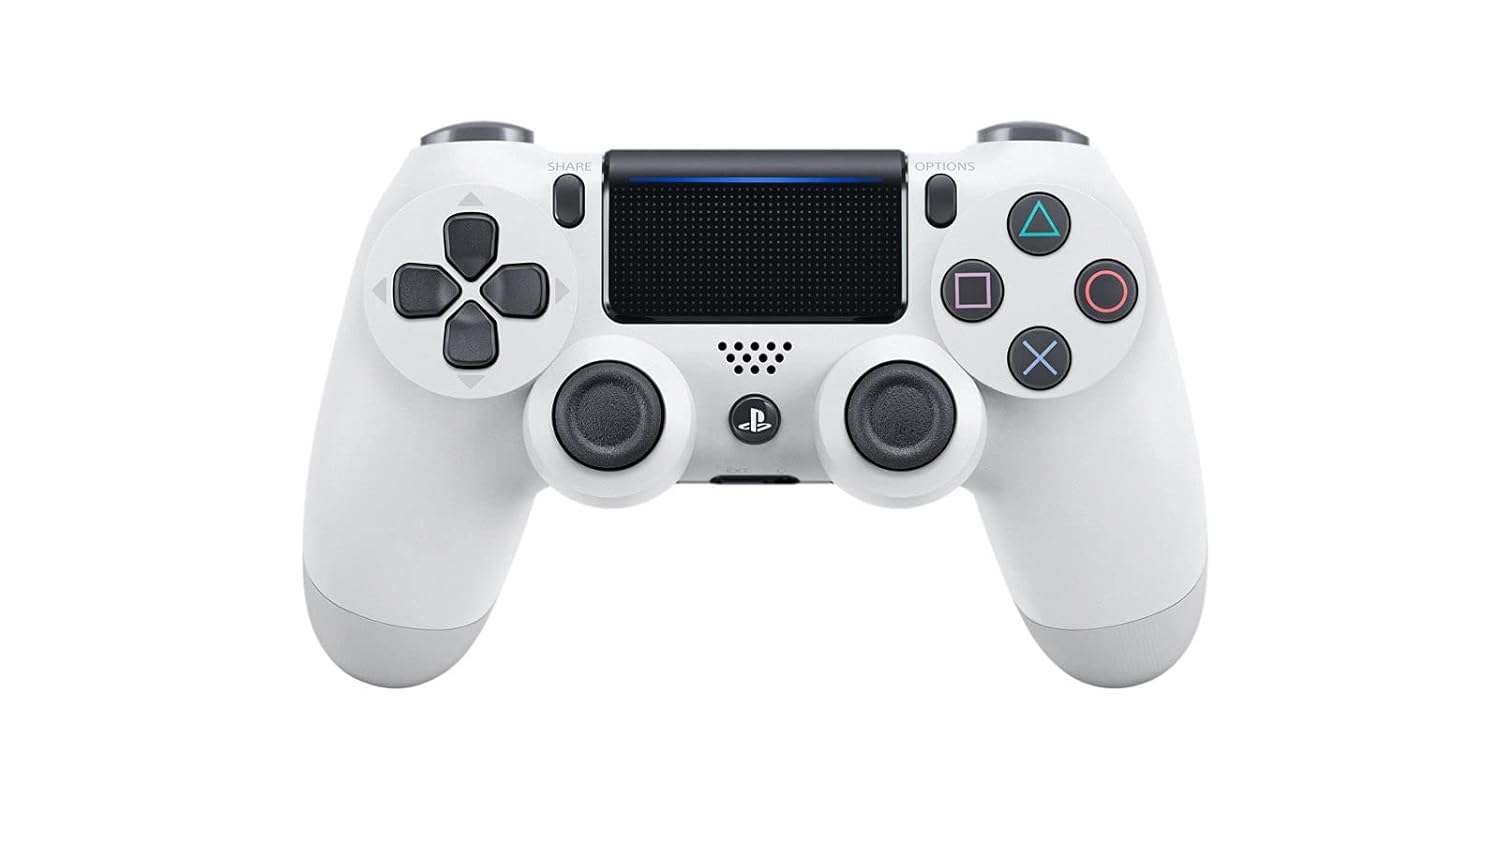 PlayStation 4 DualShock Wireless Controller V2  Weiß